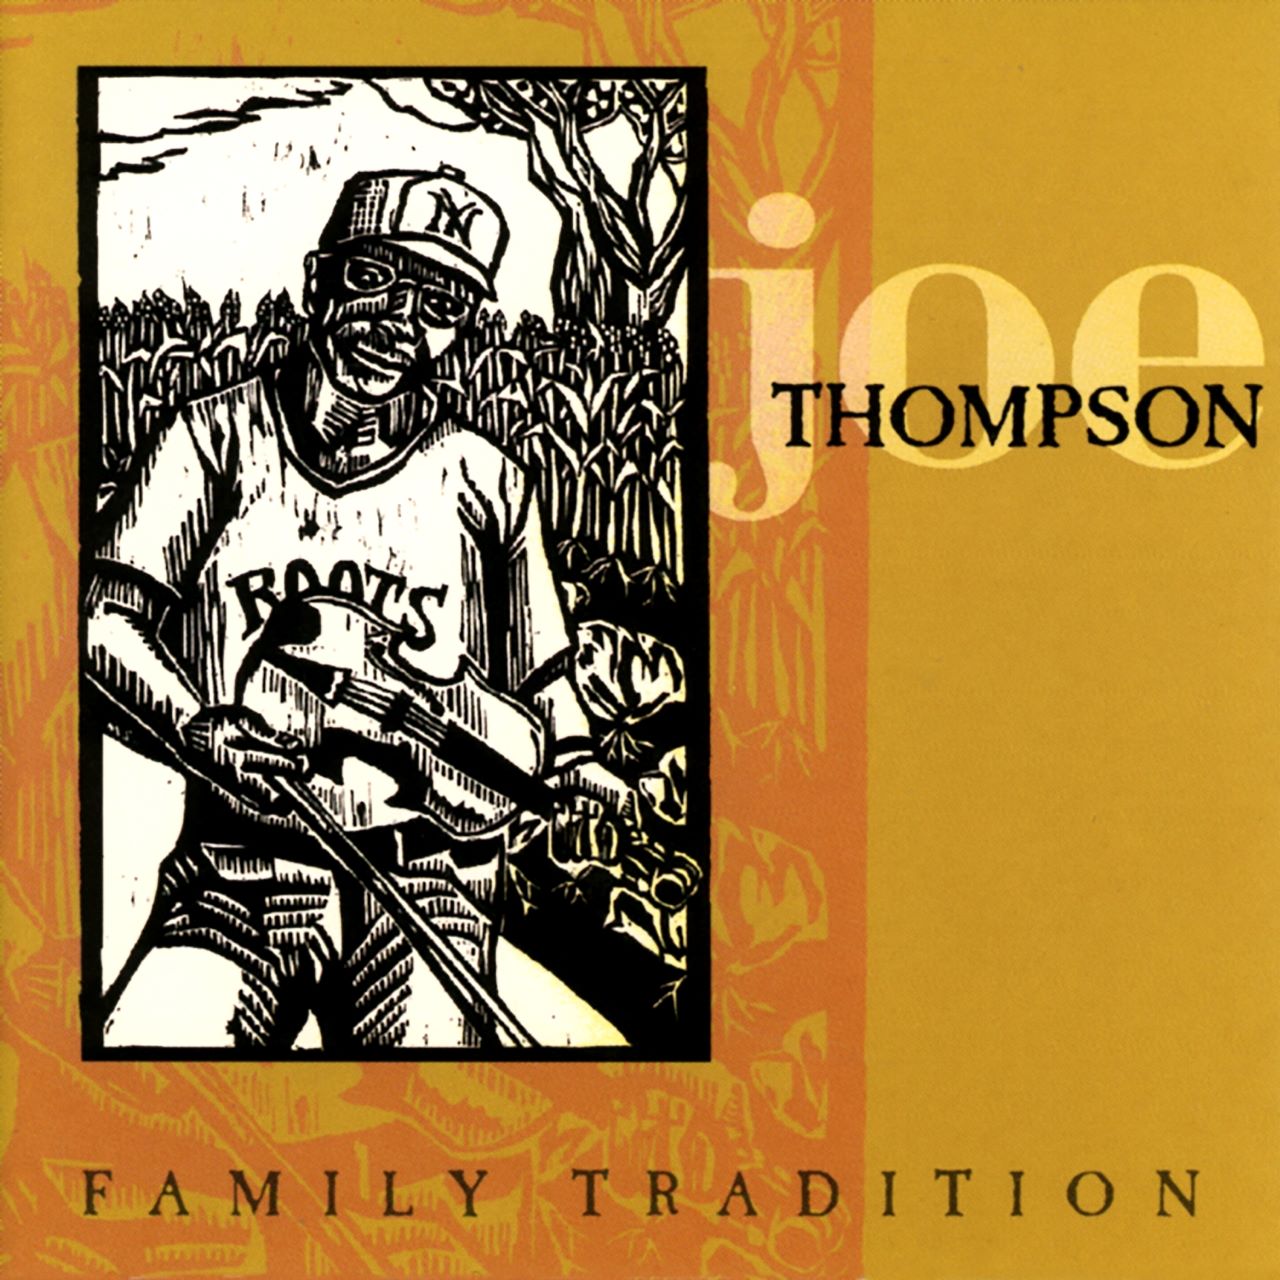 Joe Thompson - Family Traditions cover album